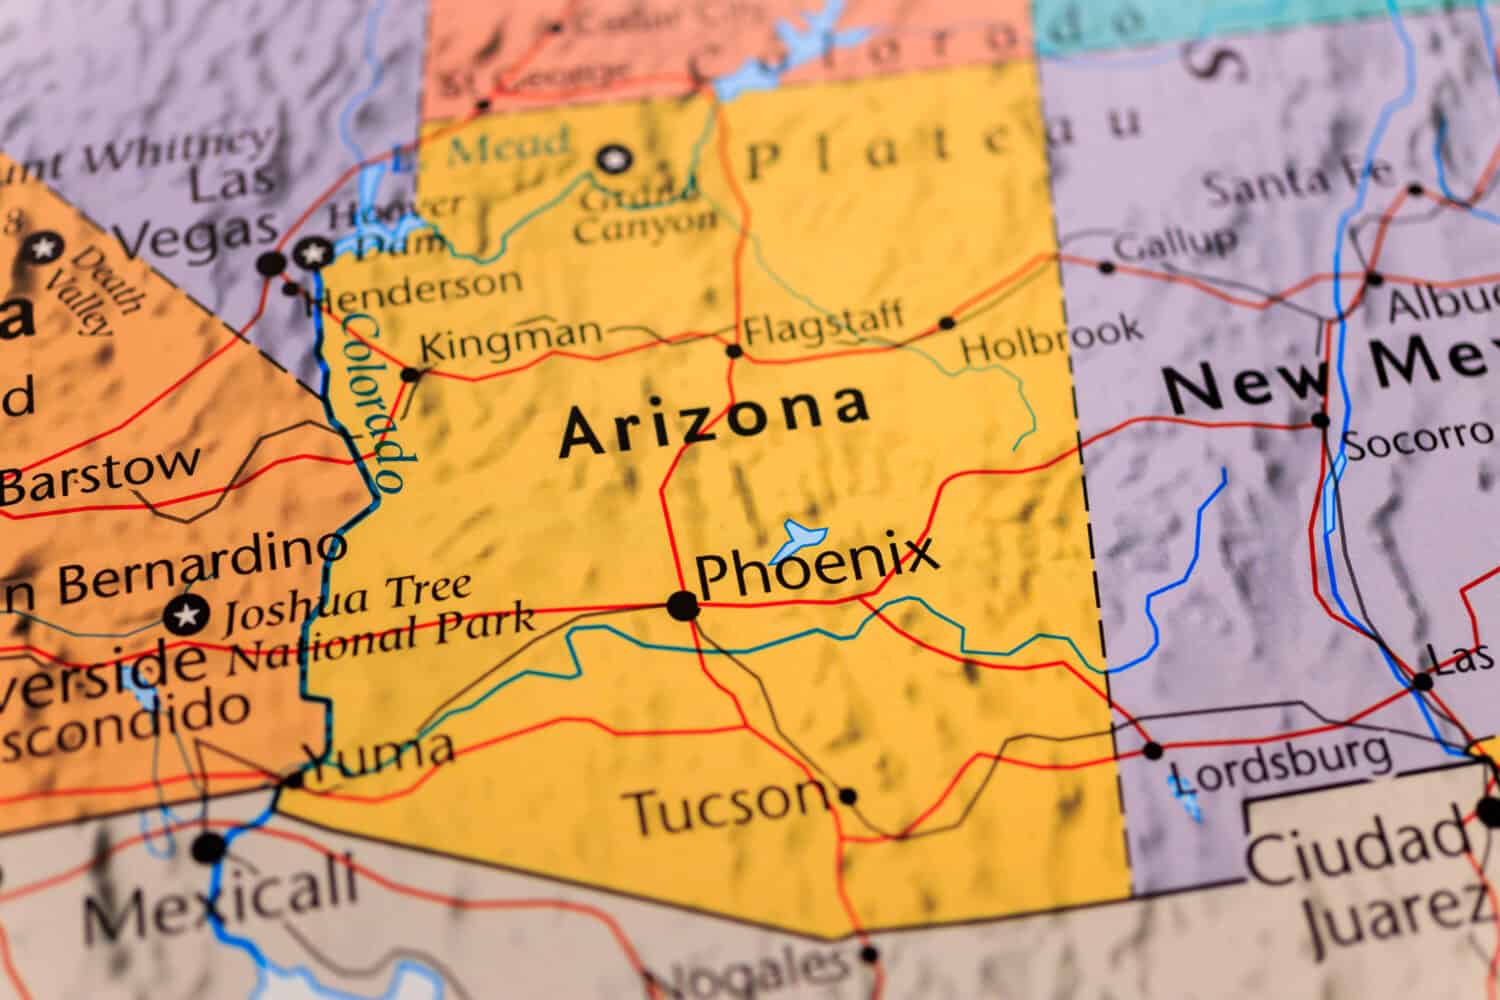 Arizona on the map